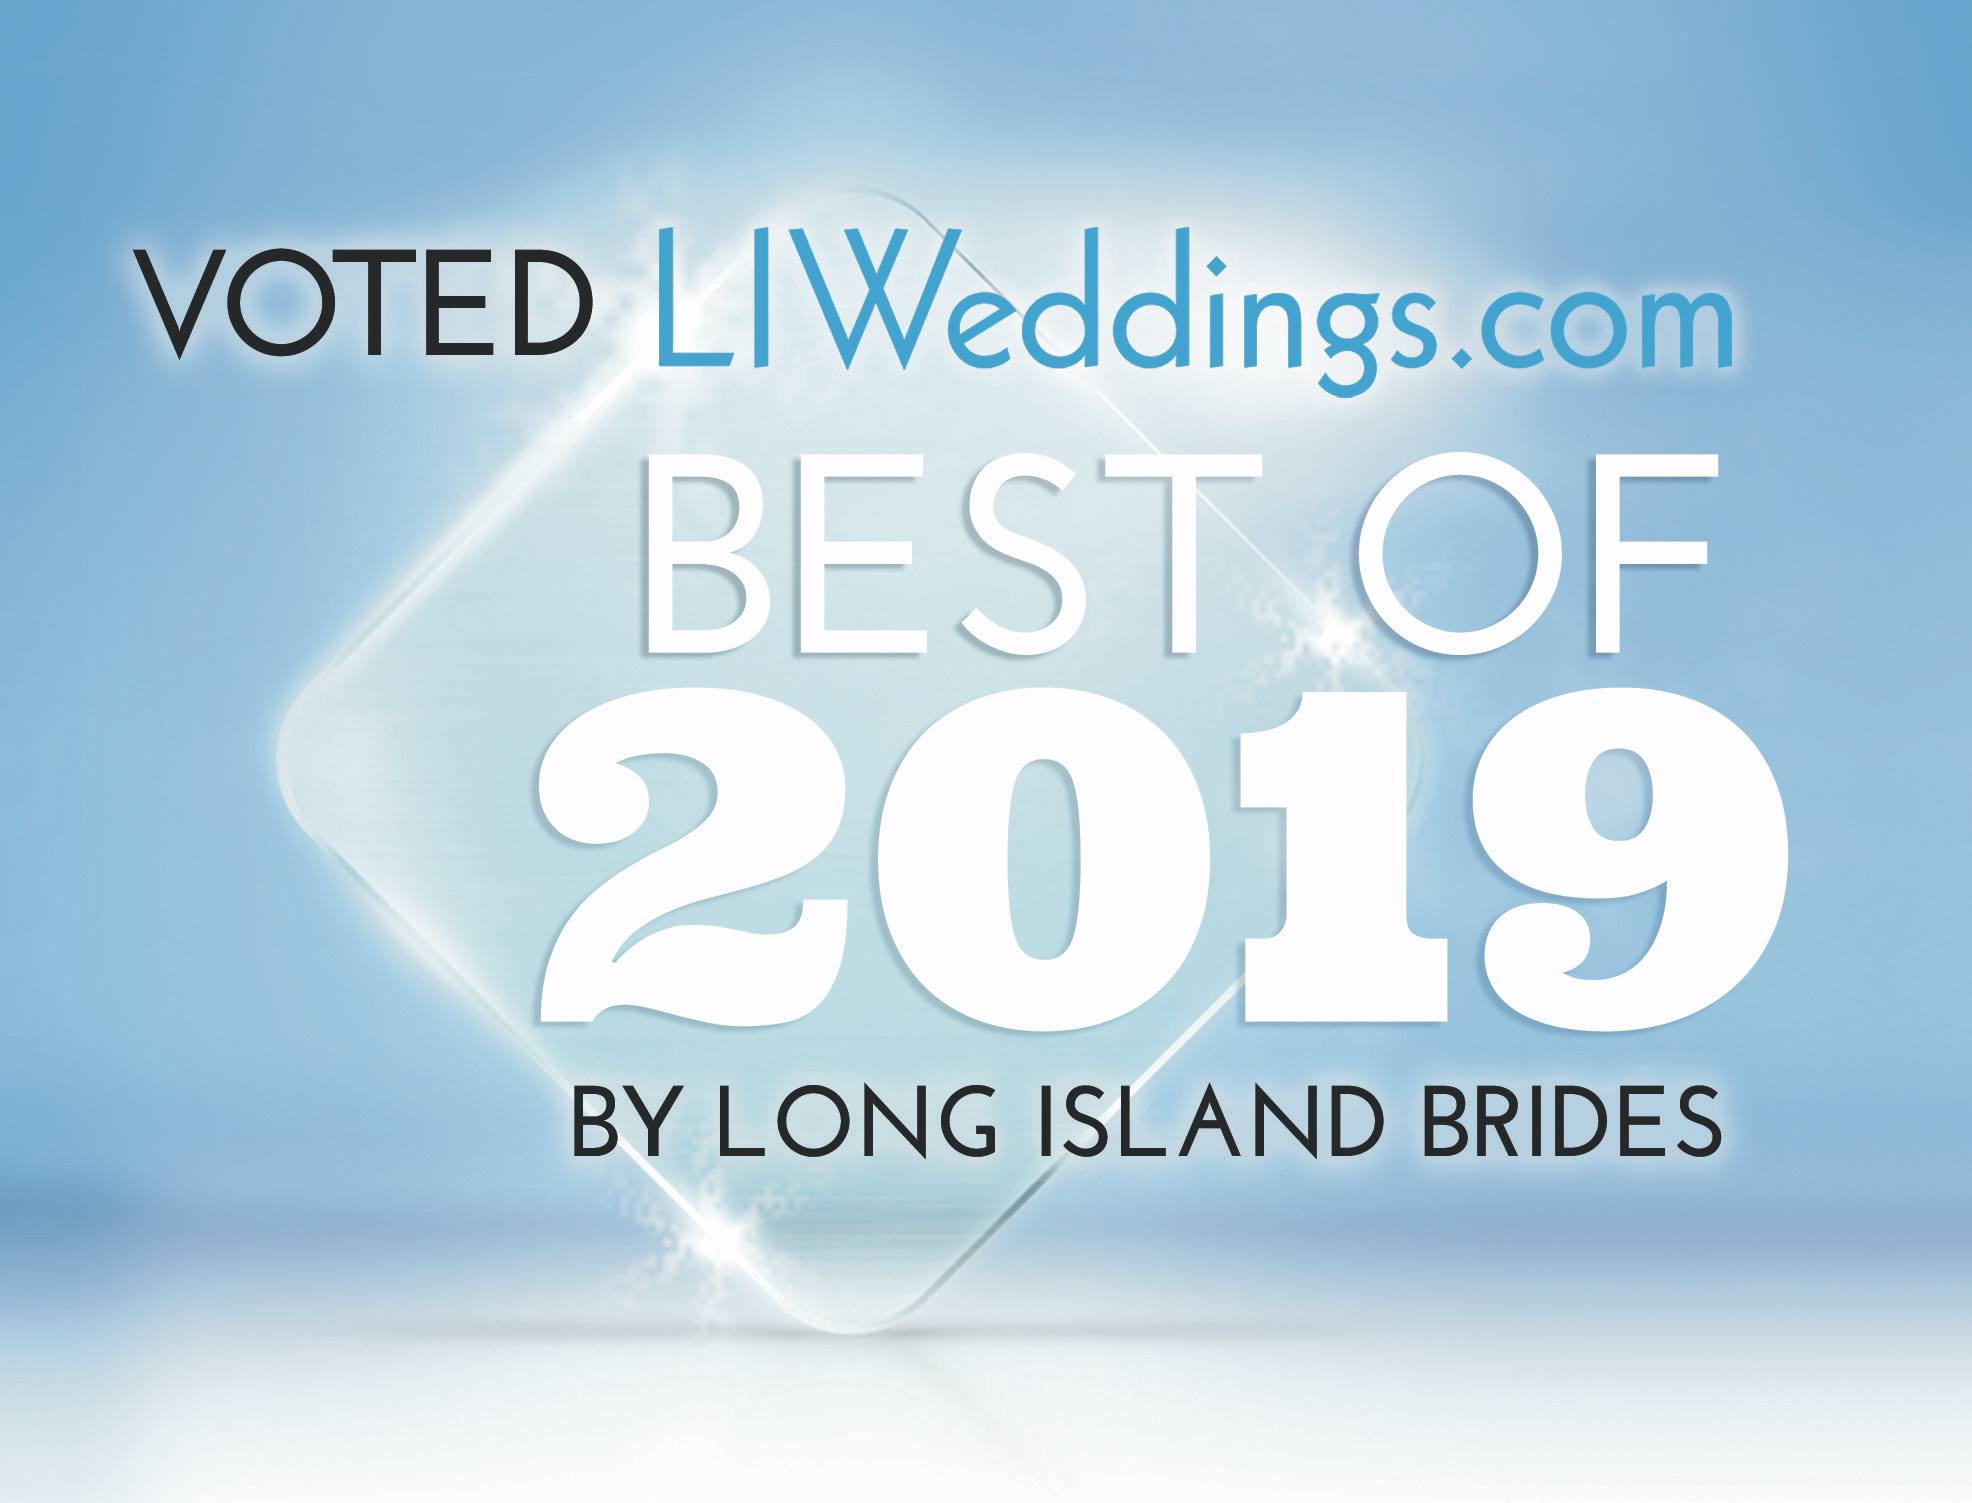 LIWeddings.com Best of 2019